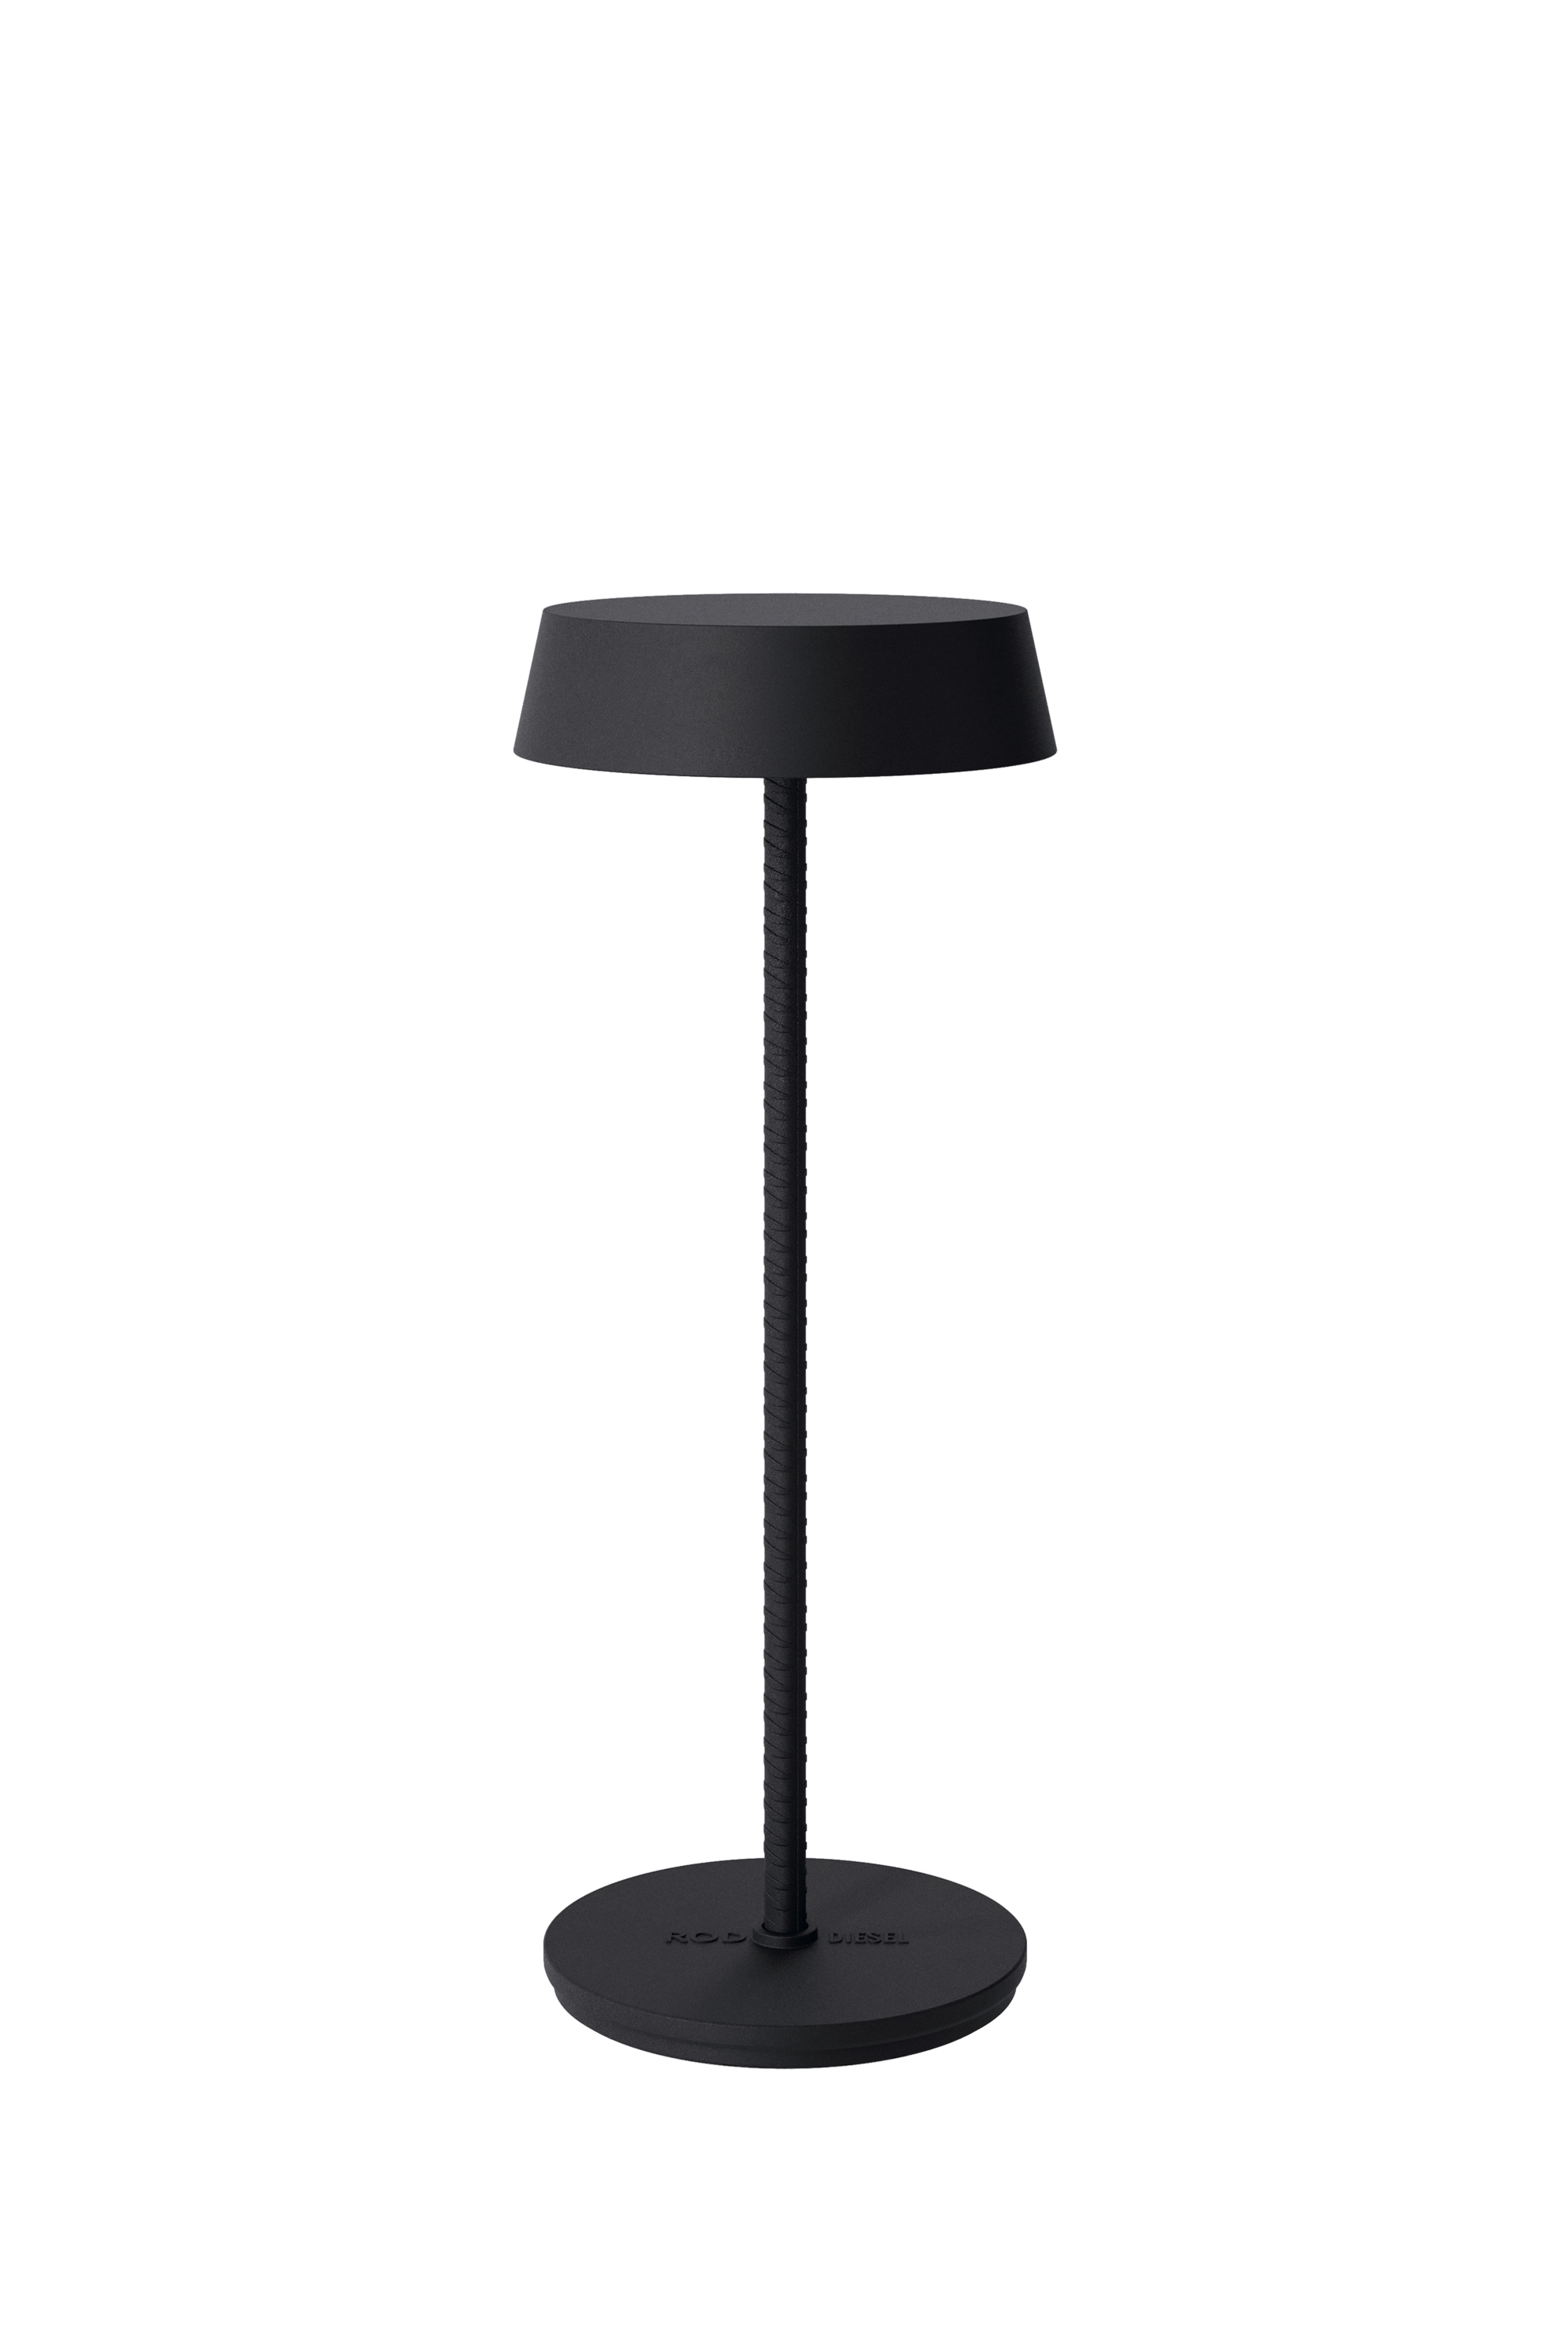 51181 2020 ROD CORDLESS TABLE LAMP DARK, Black